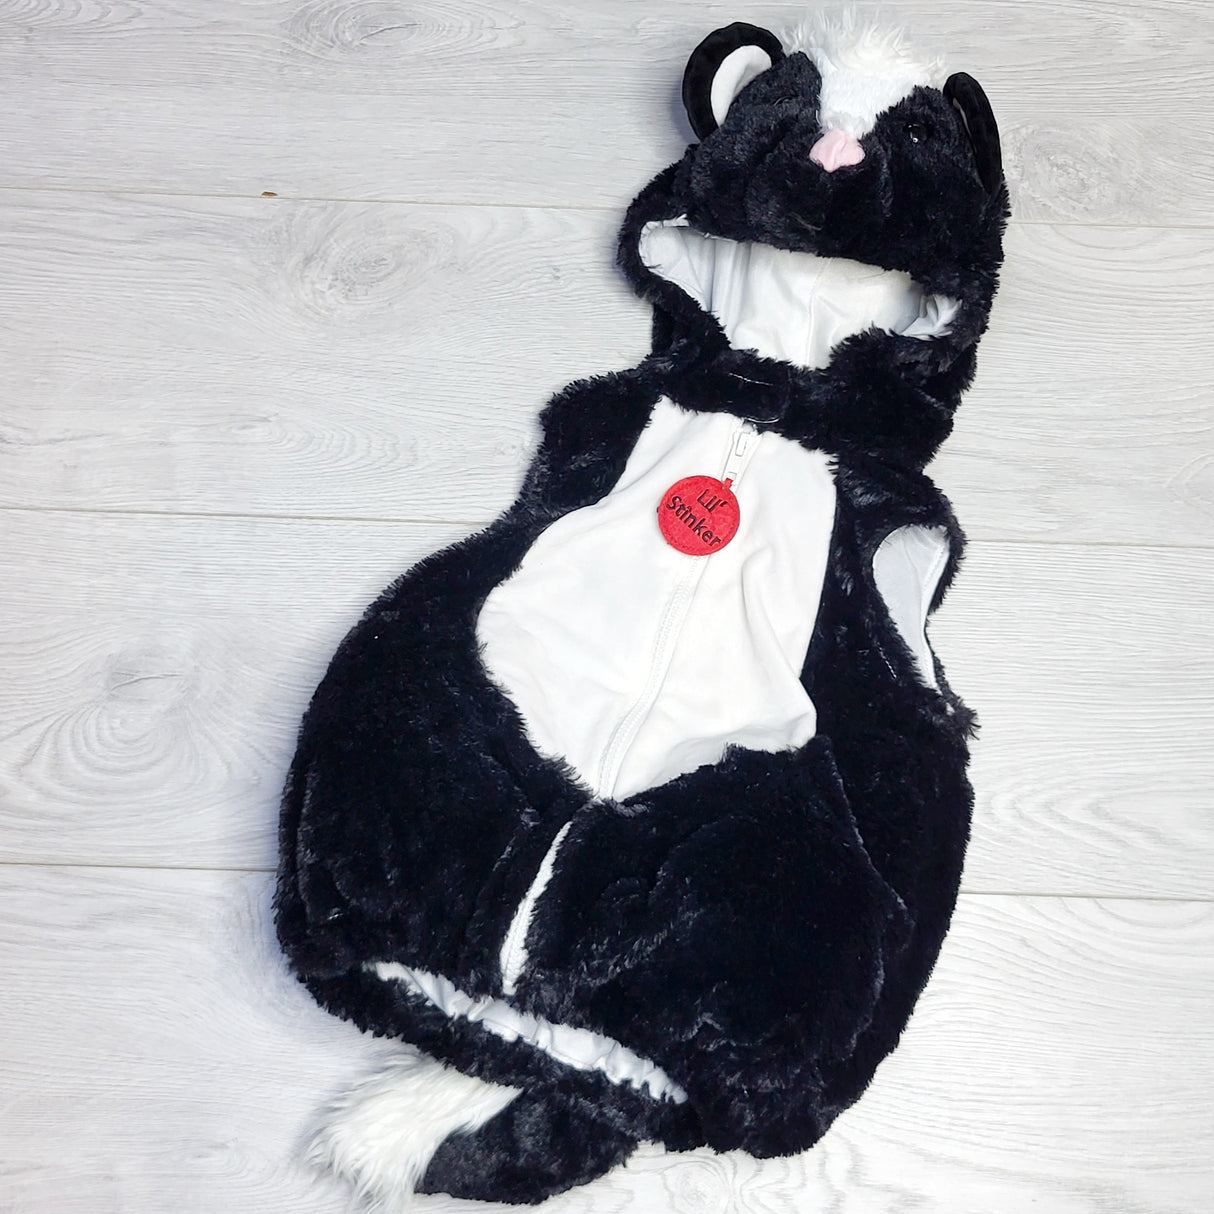 NKLB5 - Humane Society International skunk costume. Size 12 months